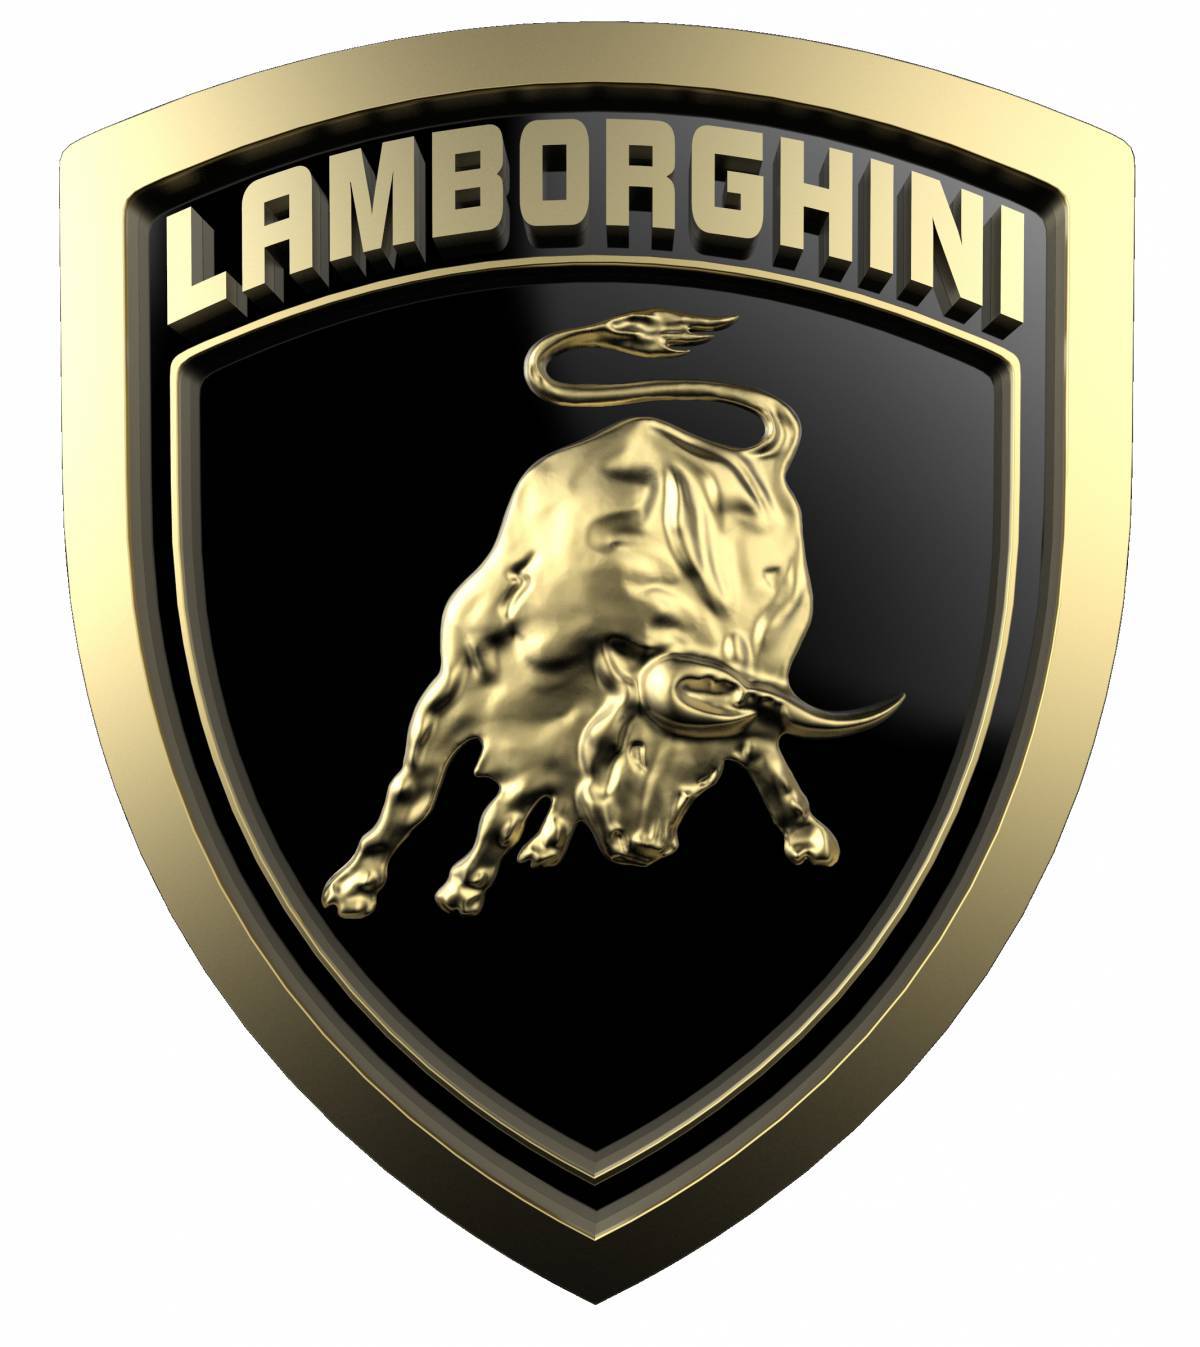 Новое лого ламборгини. Значок Ламборджини. Марка Lamborghini. Фирменный знак Ламборджини. Марка Ламборджини значок.